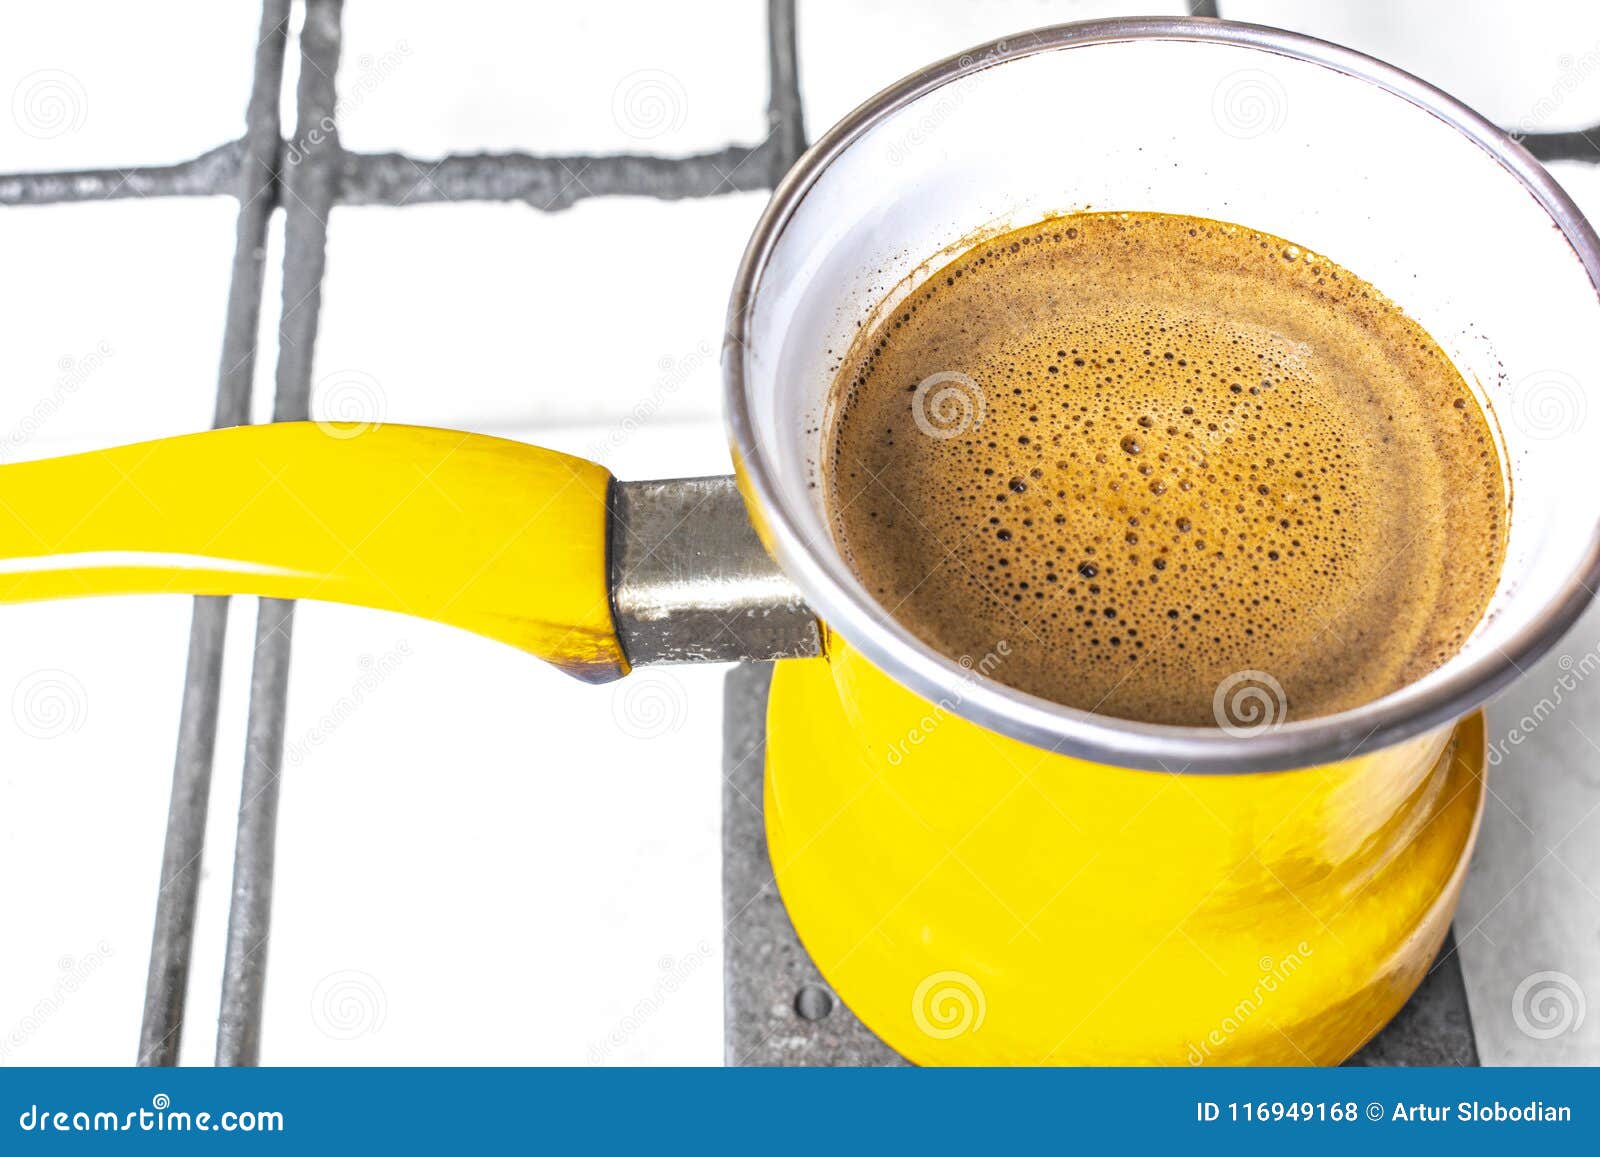 https://thumbs.dreamstime.com/z/kitchen-interior-coffee-making-yellow-turkey-turk-gas-stove-coffee-foam-kitchen-interior-cooking-coffee-yellow-116949168.jpg